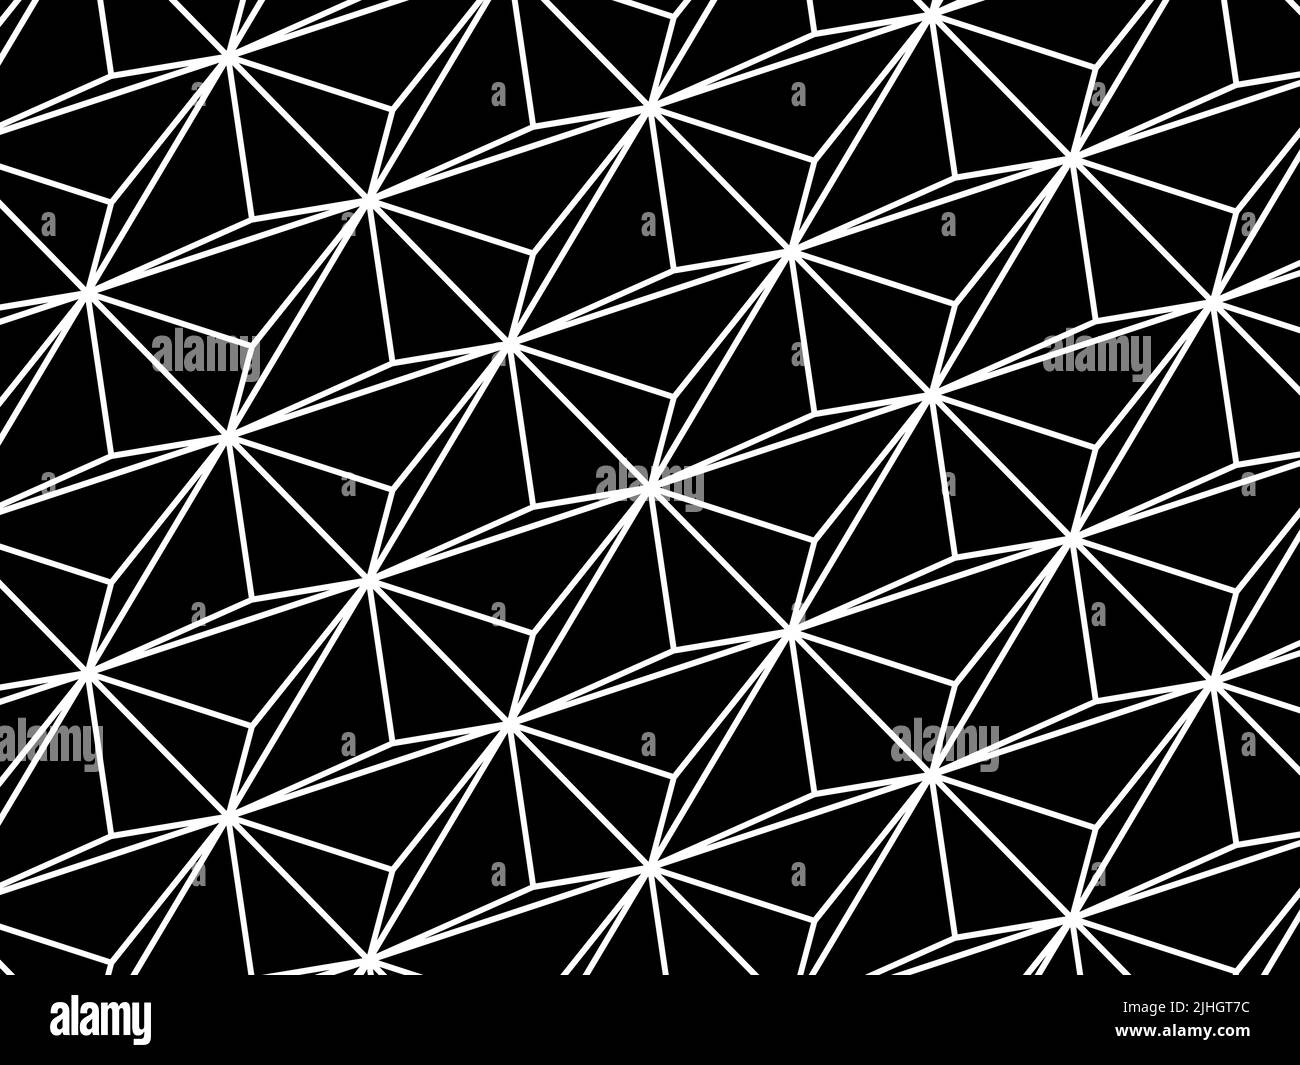 Geometric pattern, white outline illustration over black background, abstract digital illustration. 3d rendering Stock Photo